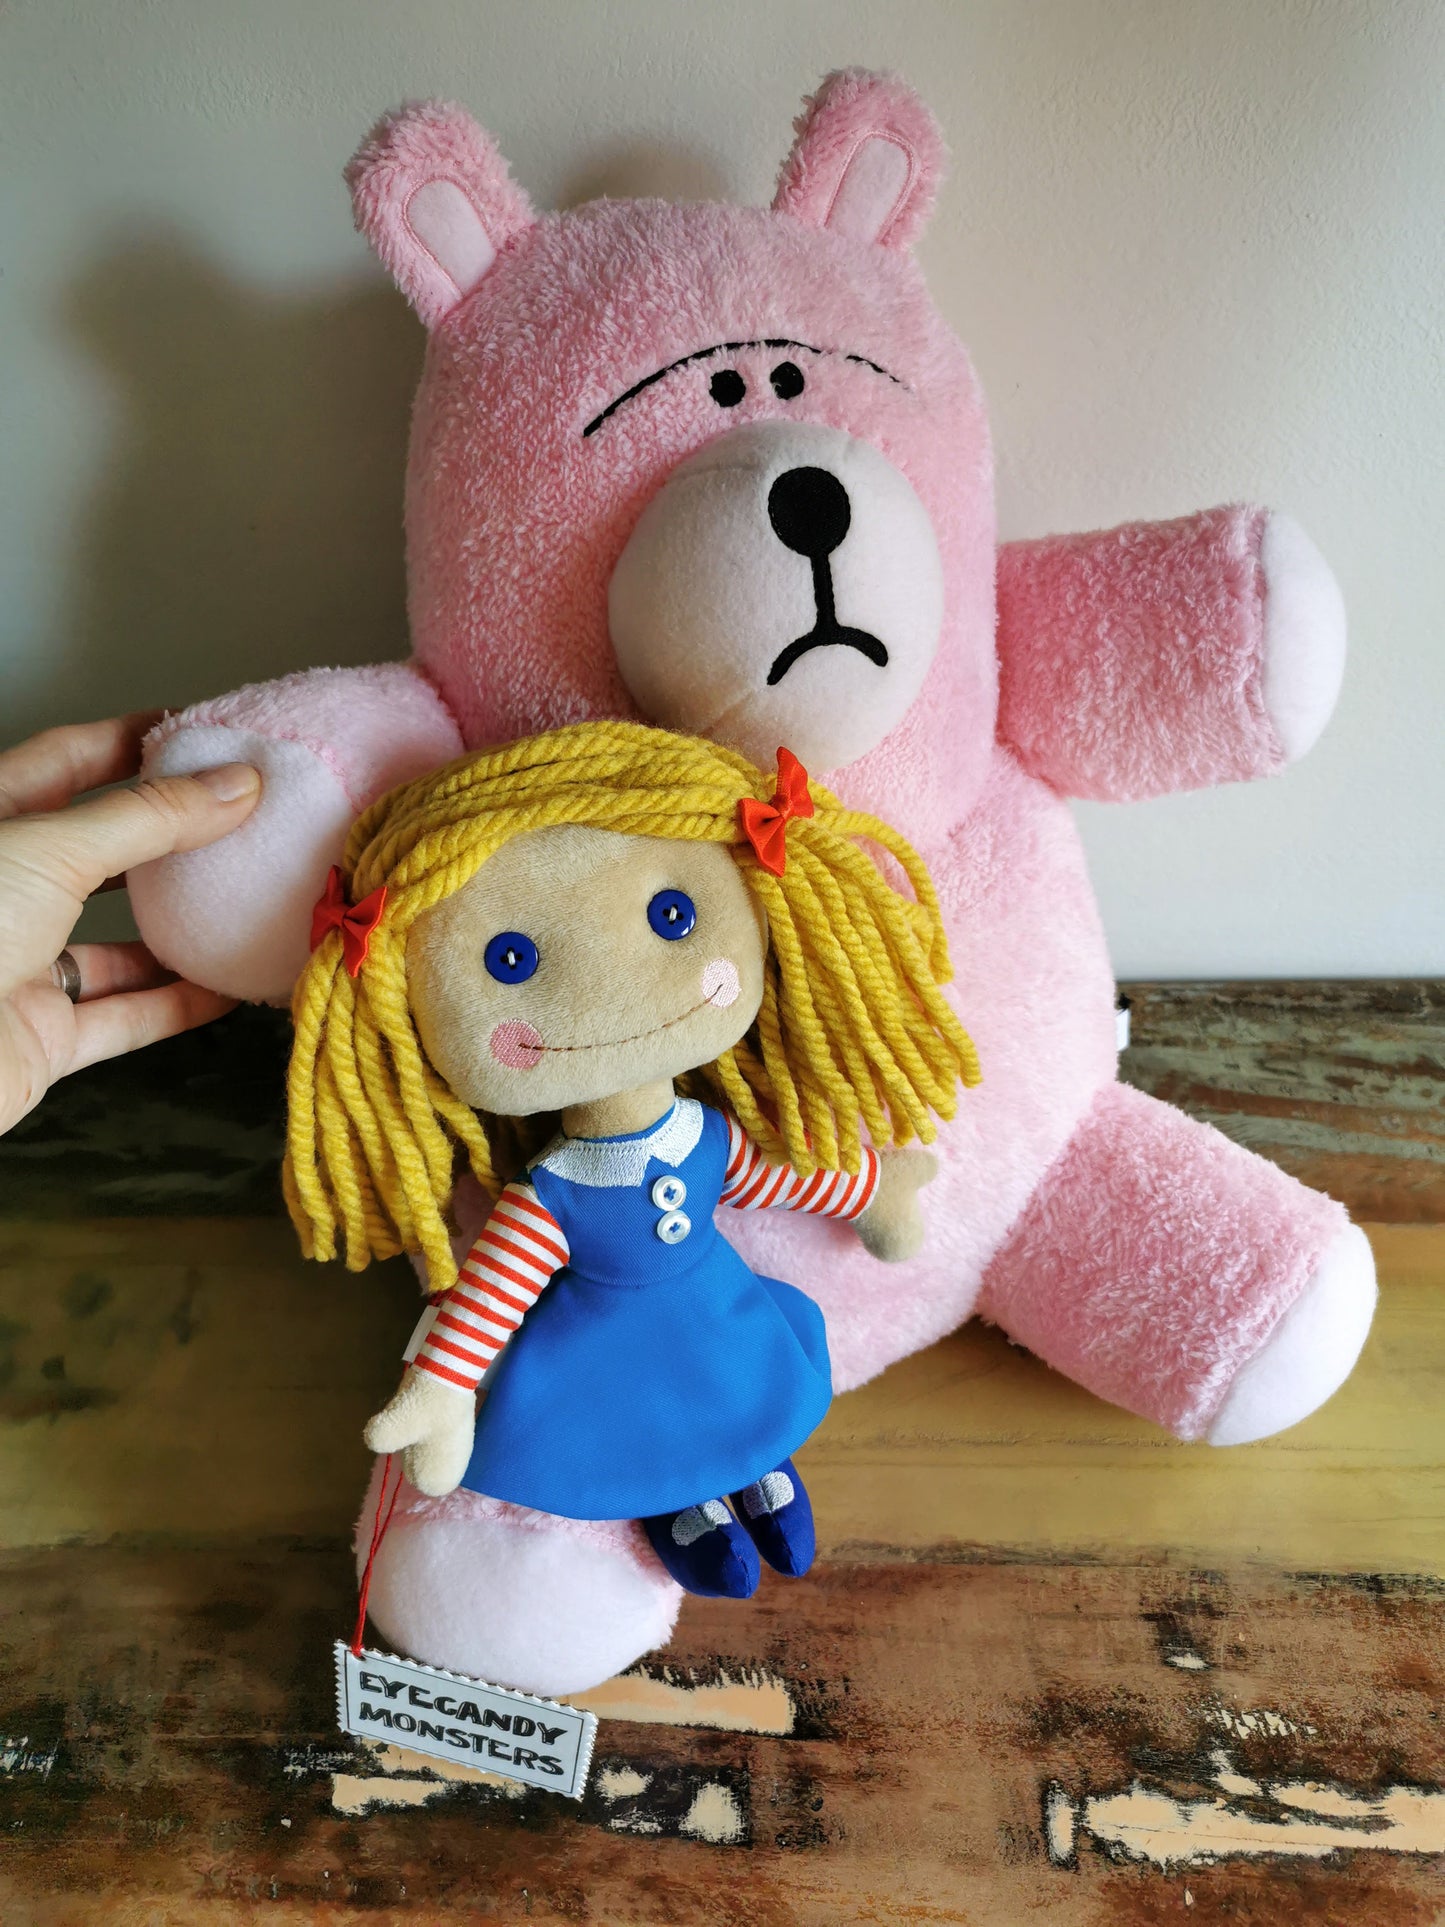 Pluș personalizat Blonde Janie Doll bazat pe Toy Story, Toy Story 2 replică a lui Janie Doll, păpușă camera lui Sid, 23 cm